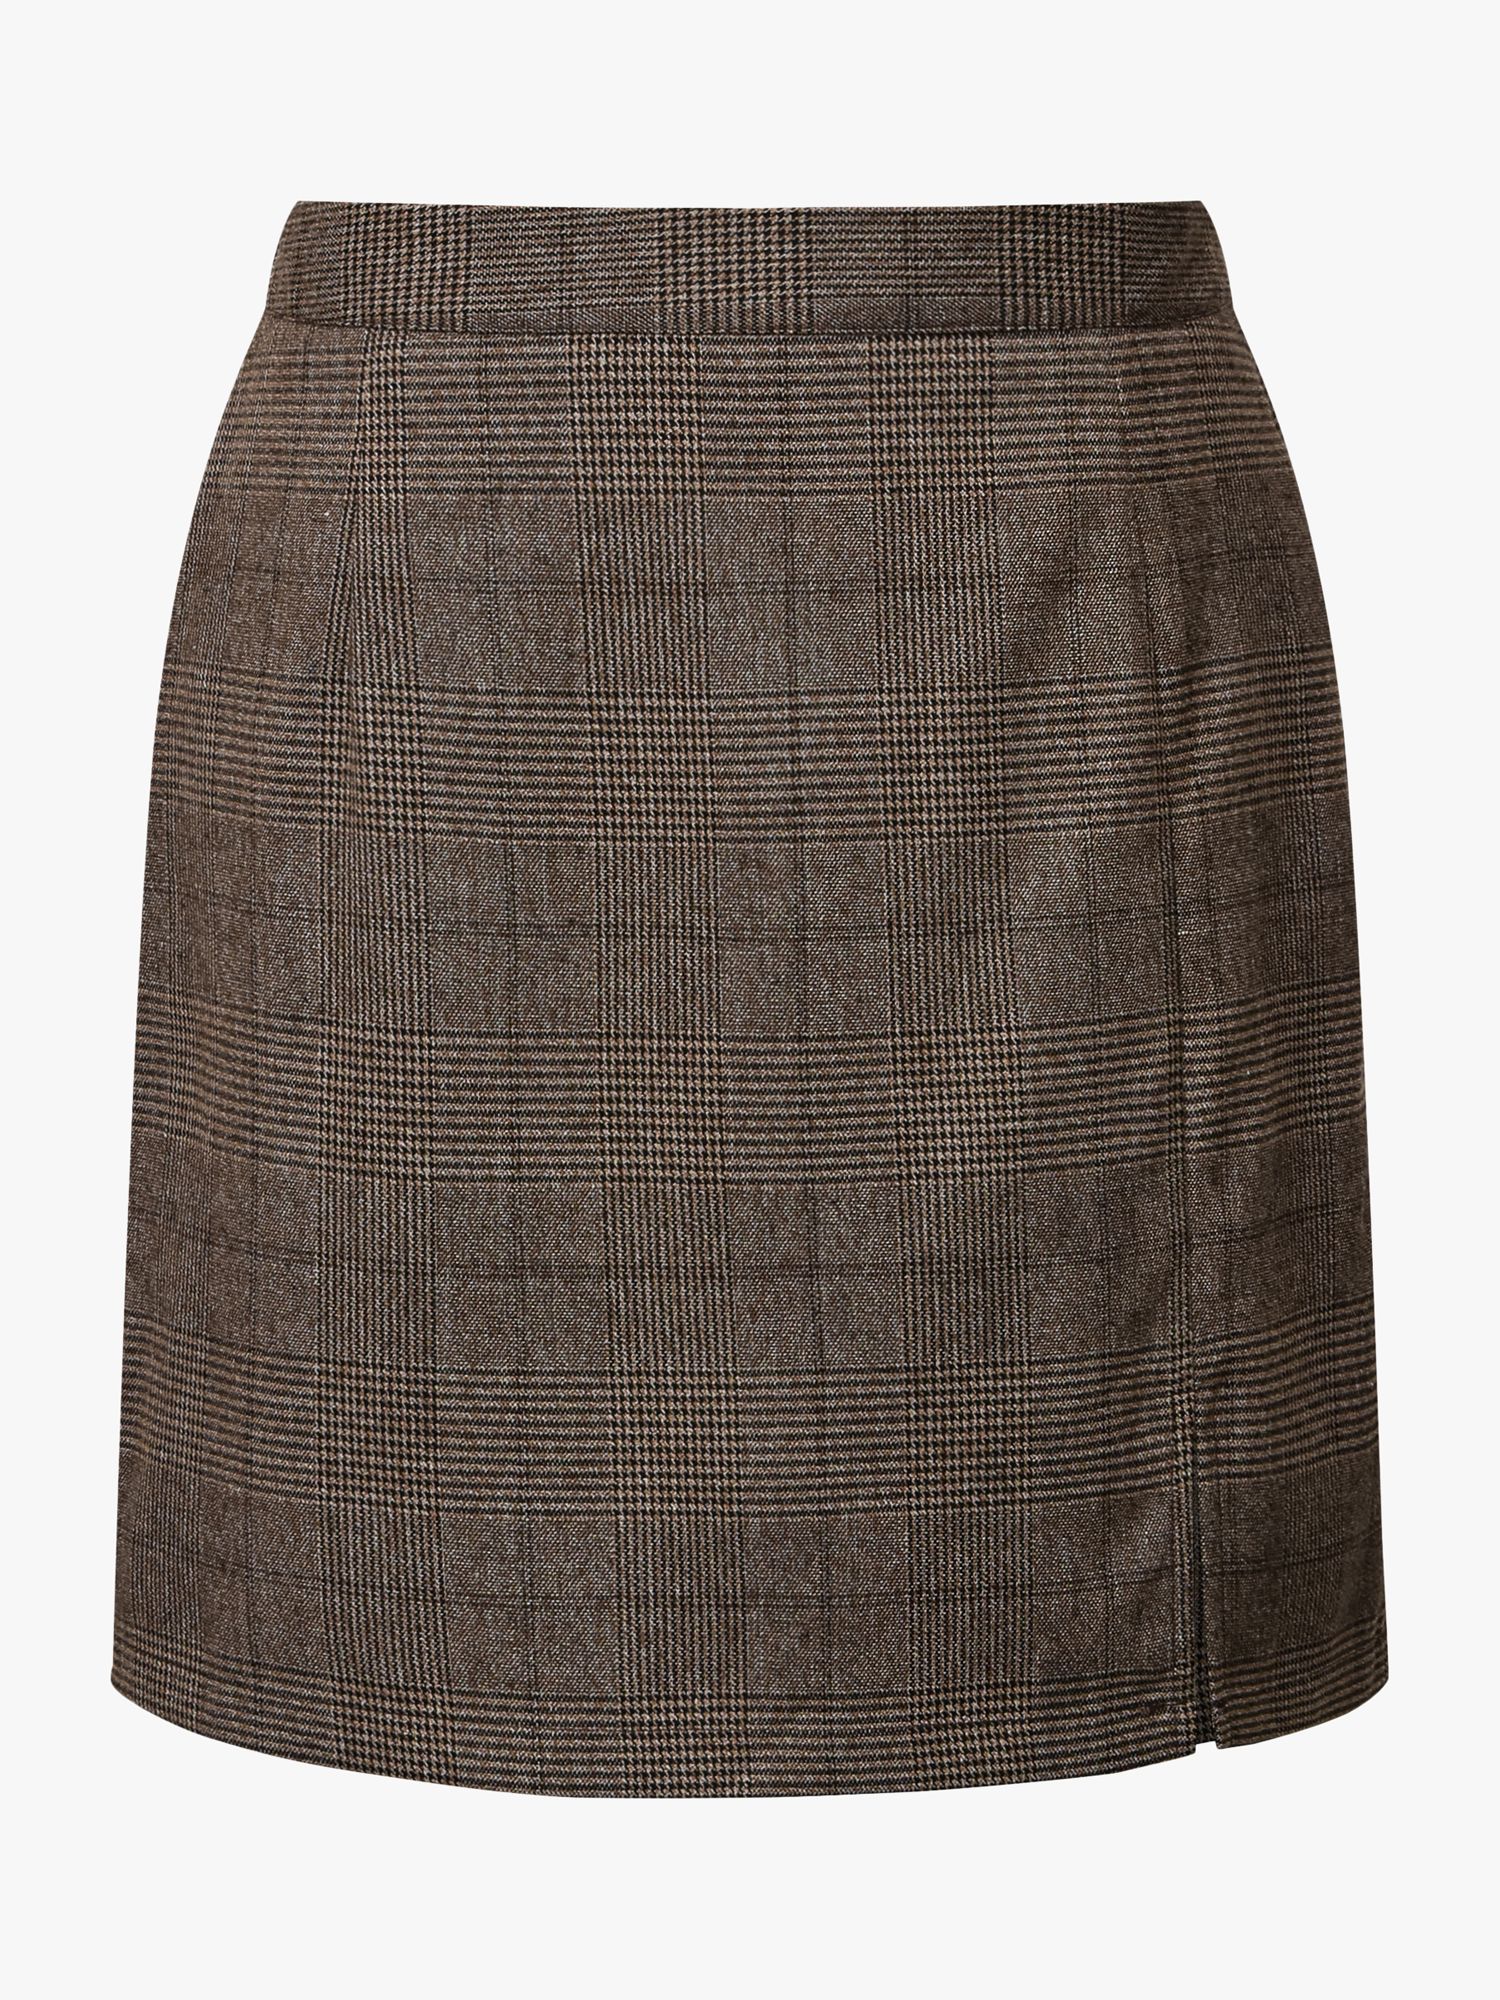 Buy A-VIEW Annali Check Mini Skirt, Brown Online at johnlewis.com